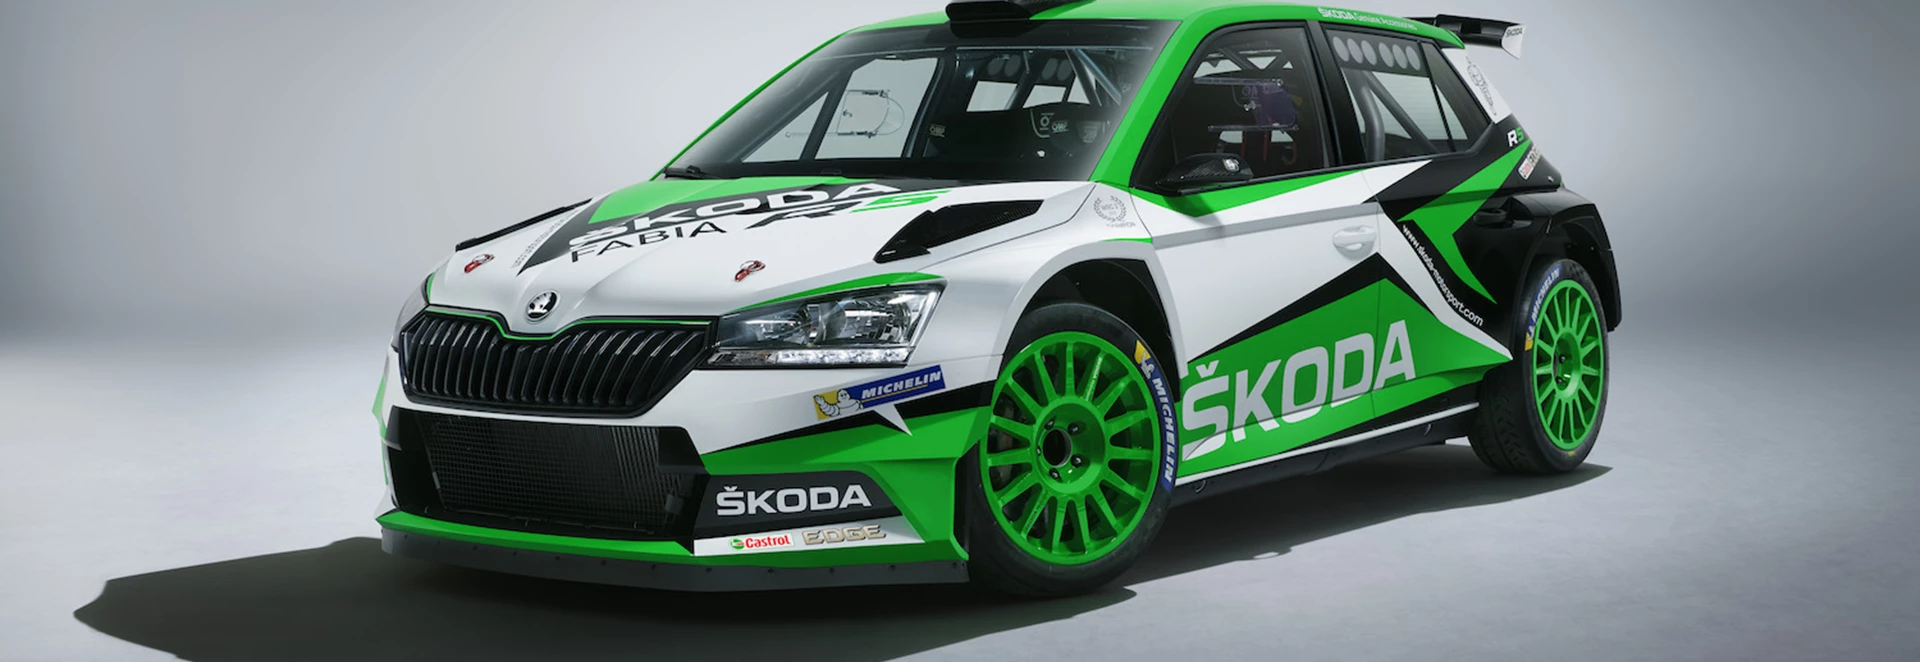 Updated Skoda Fabia R5 rally car revealed 